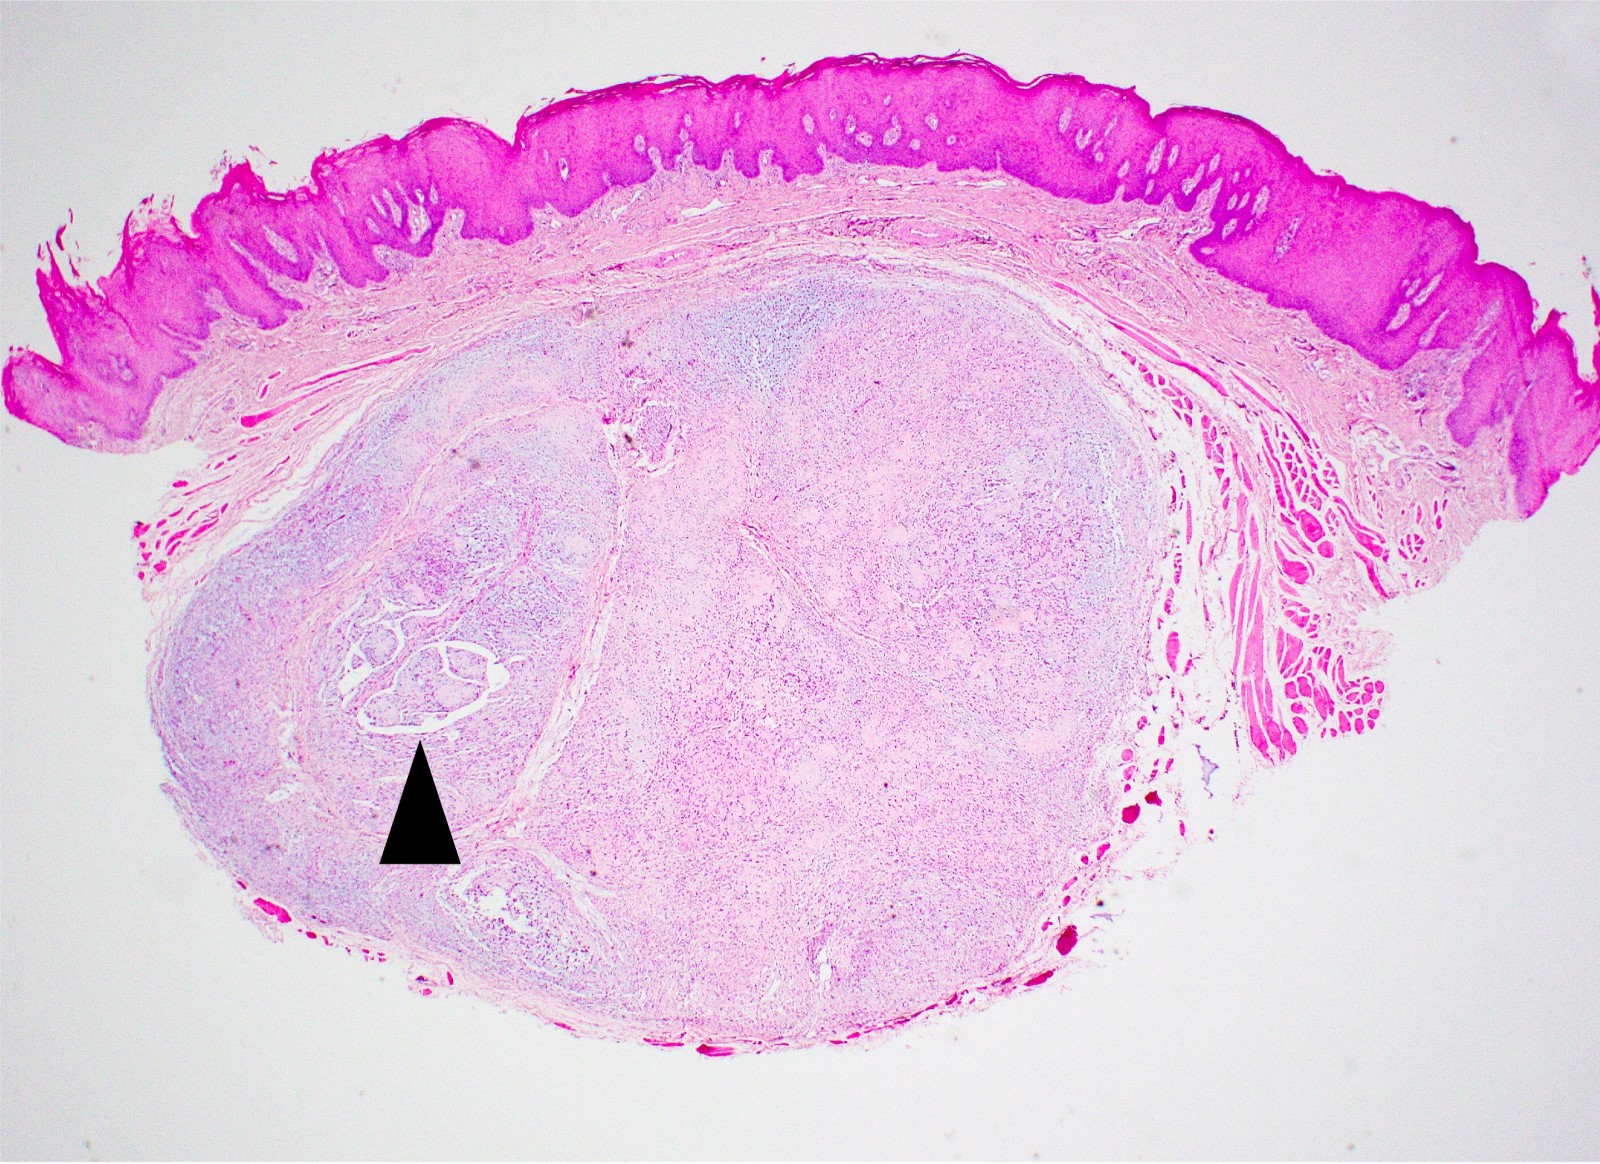 Focal papillary growth pattern